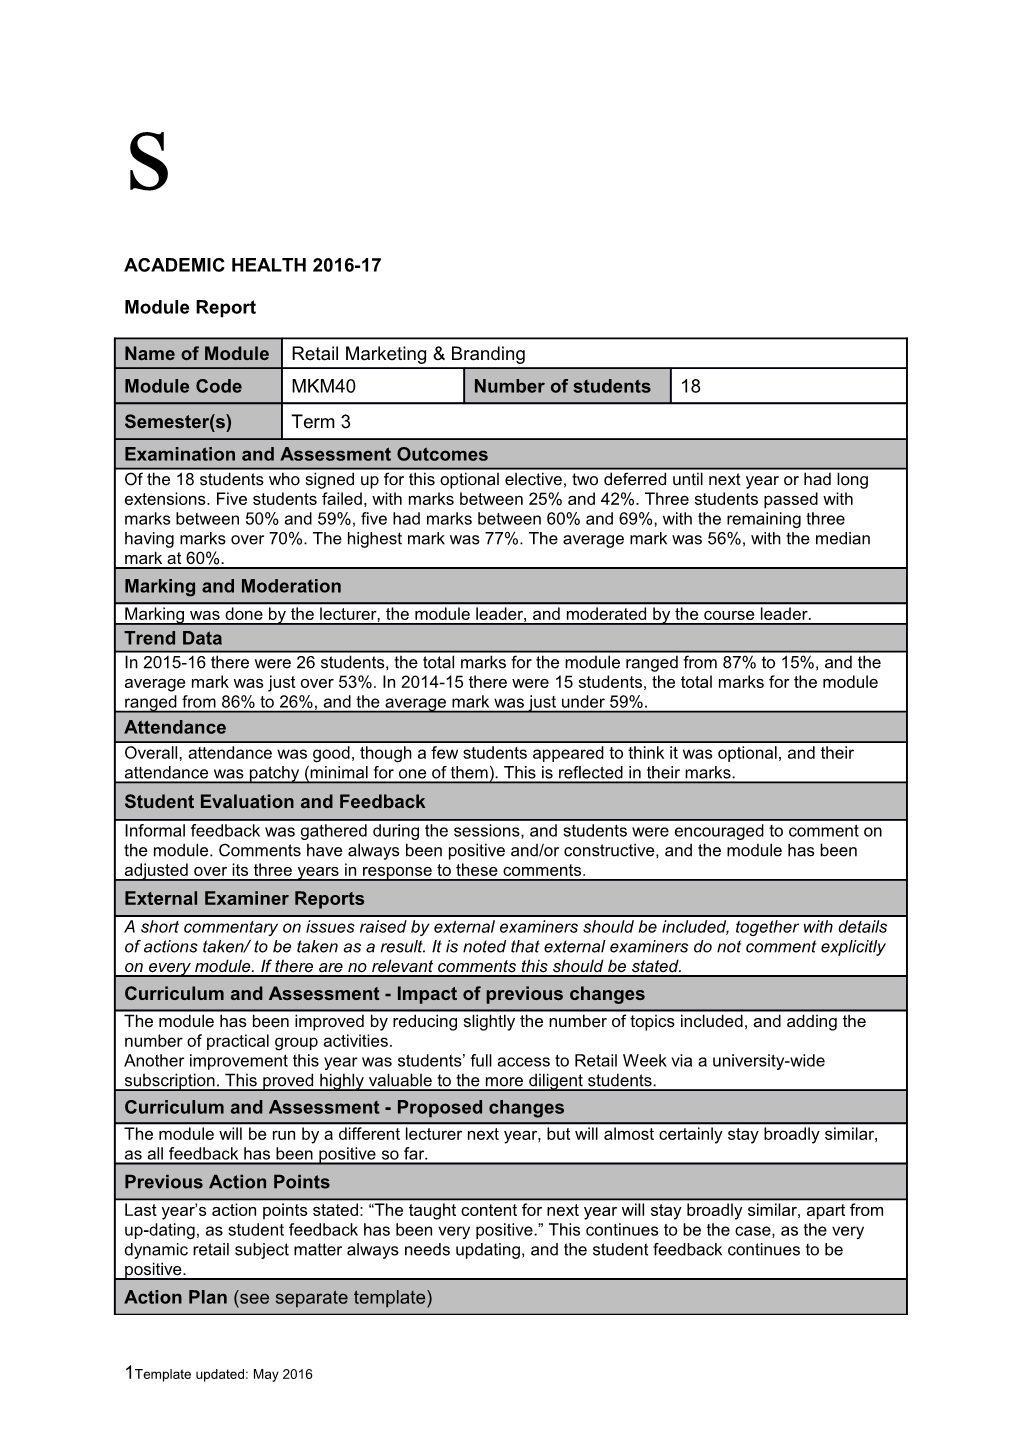 Module Report Template 2014-15